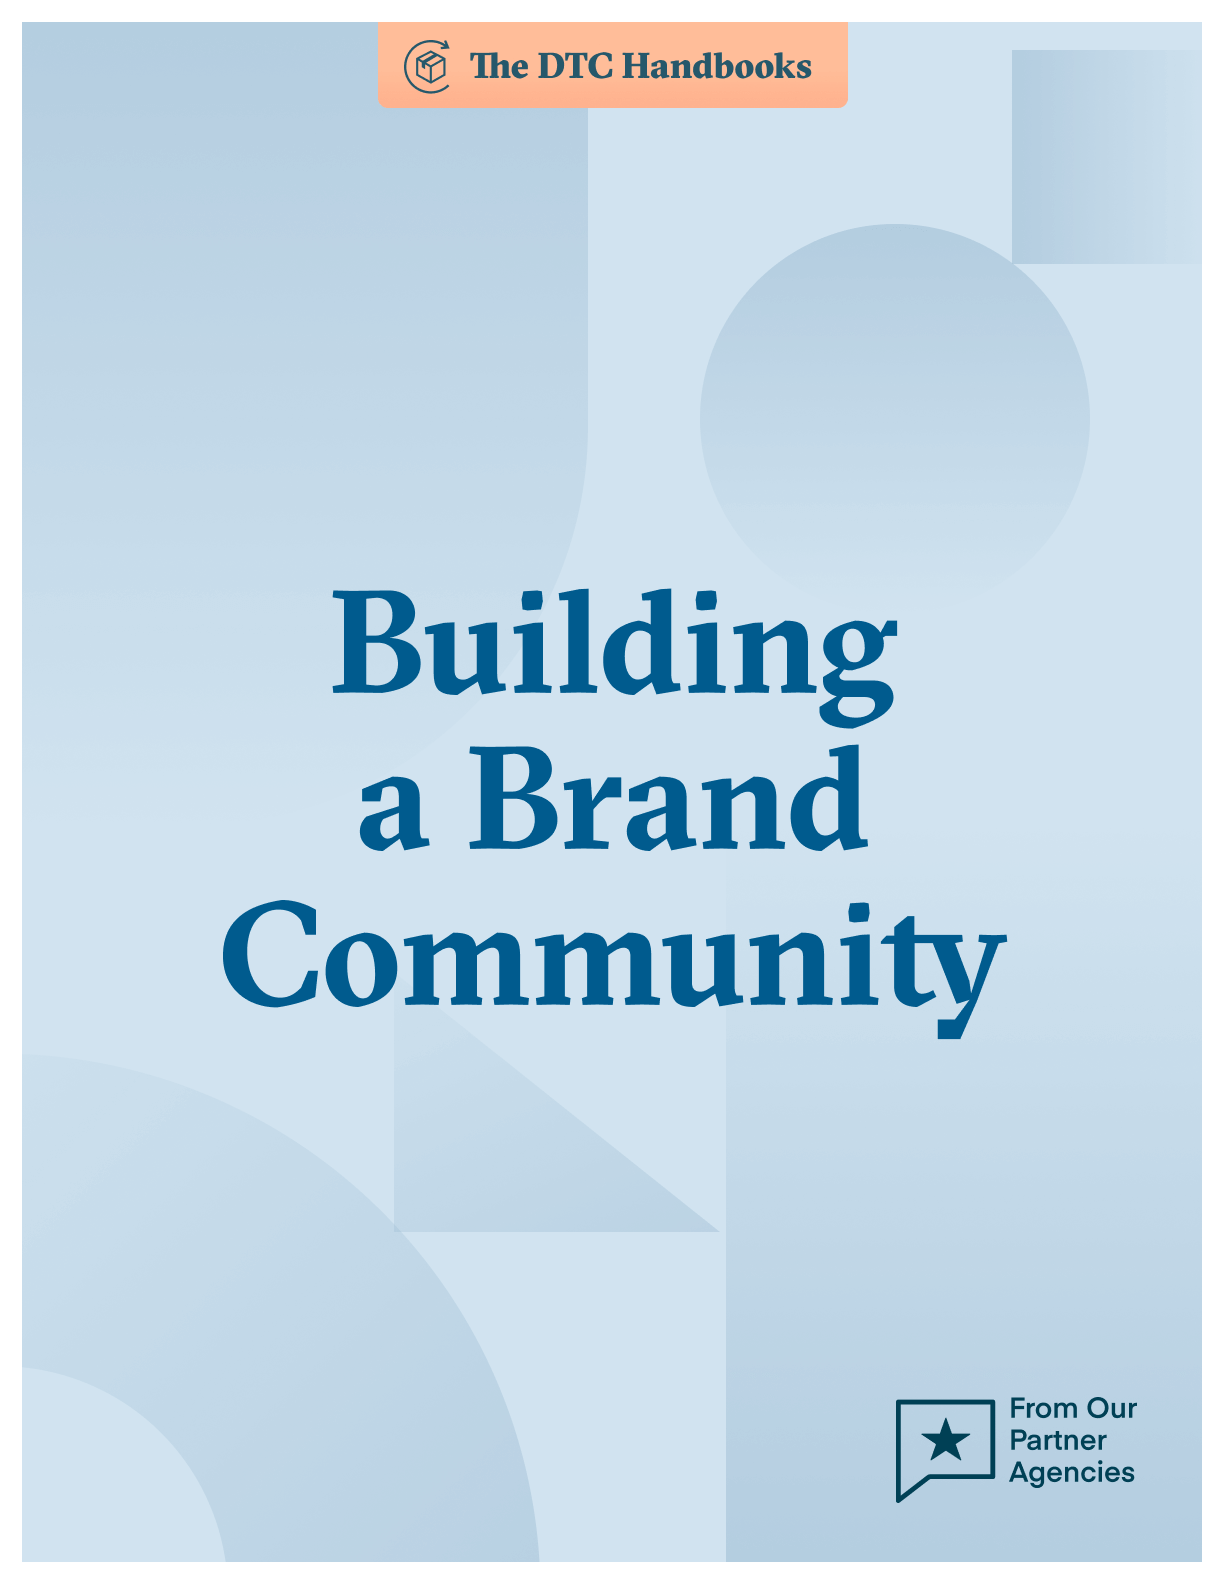 Brand Community